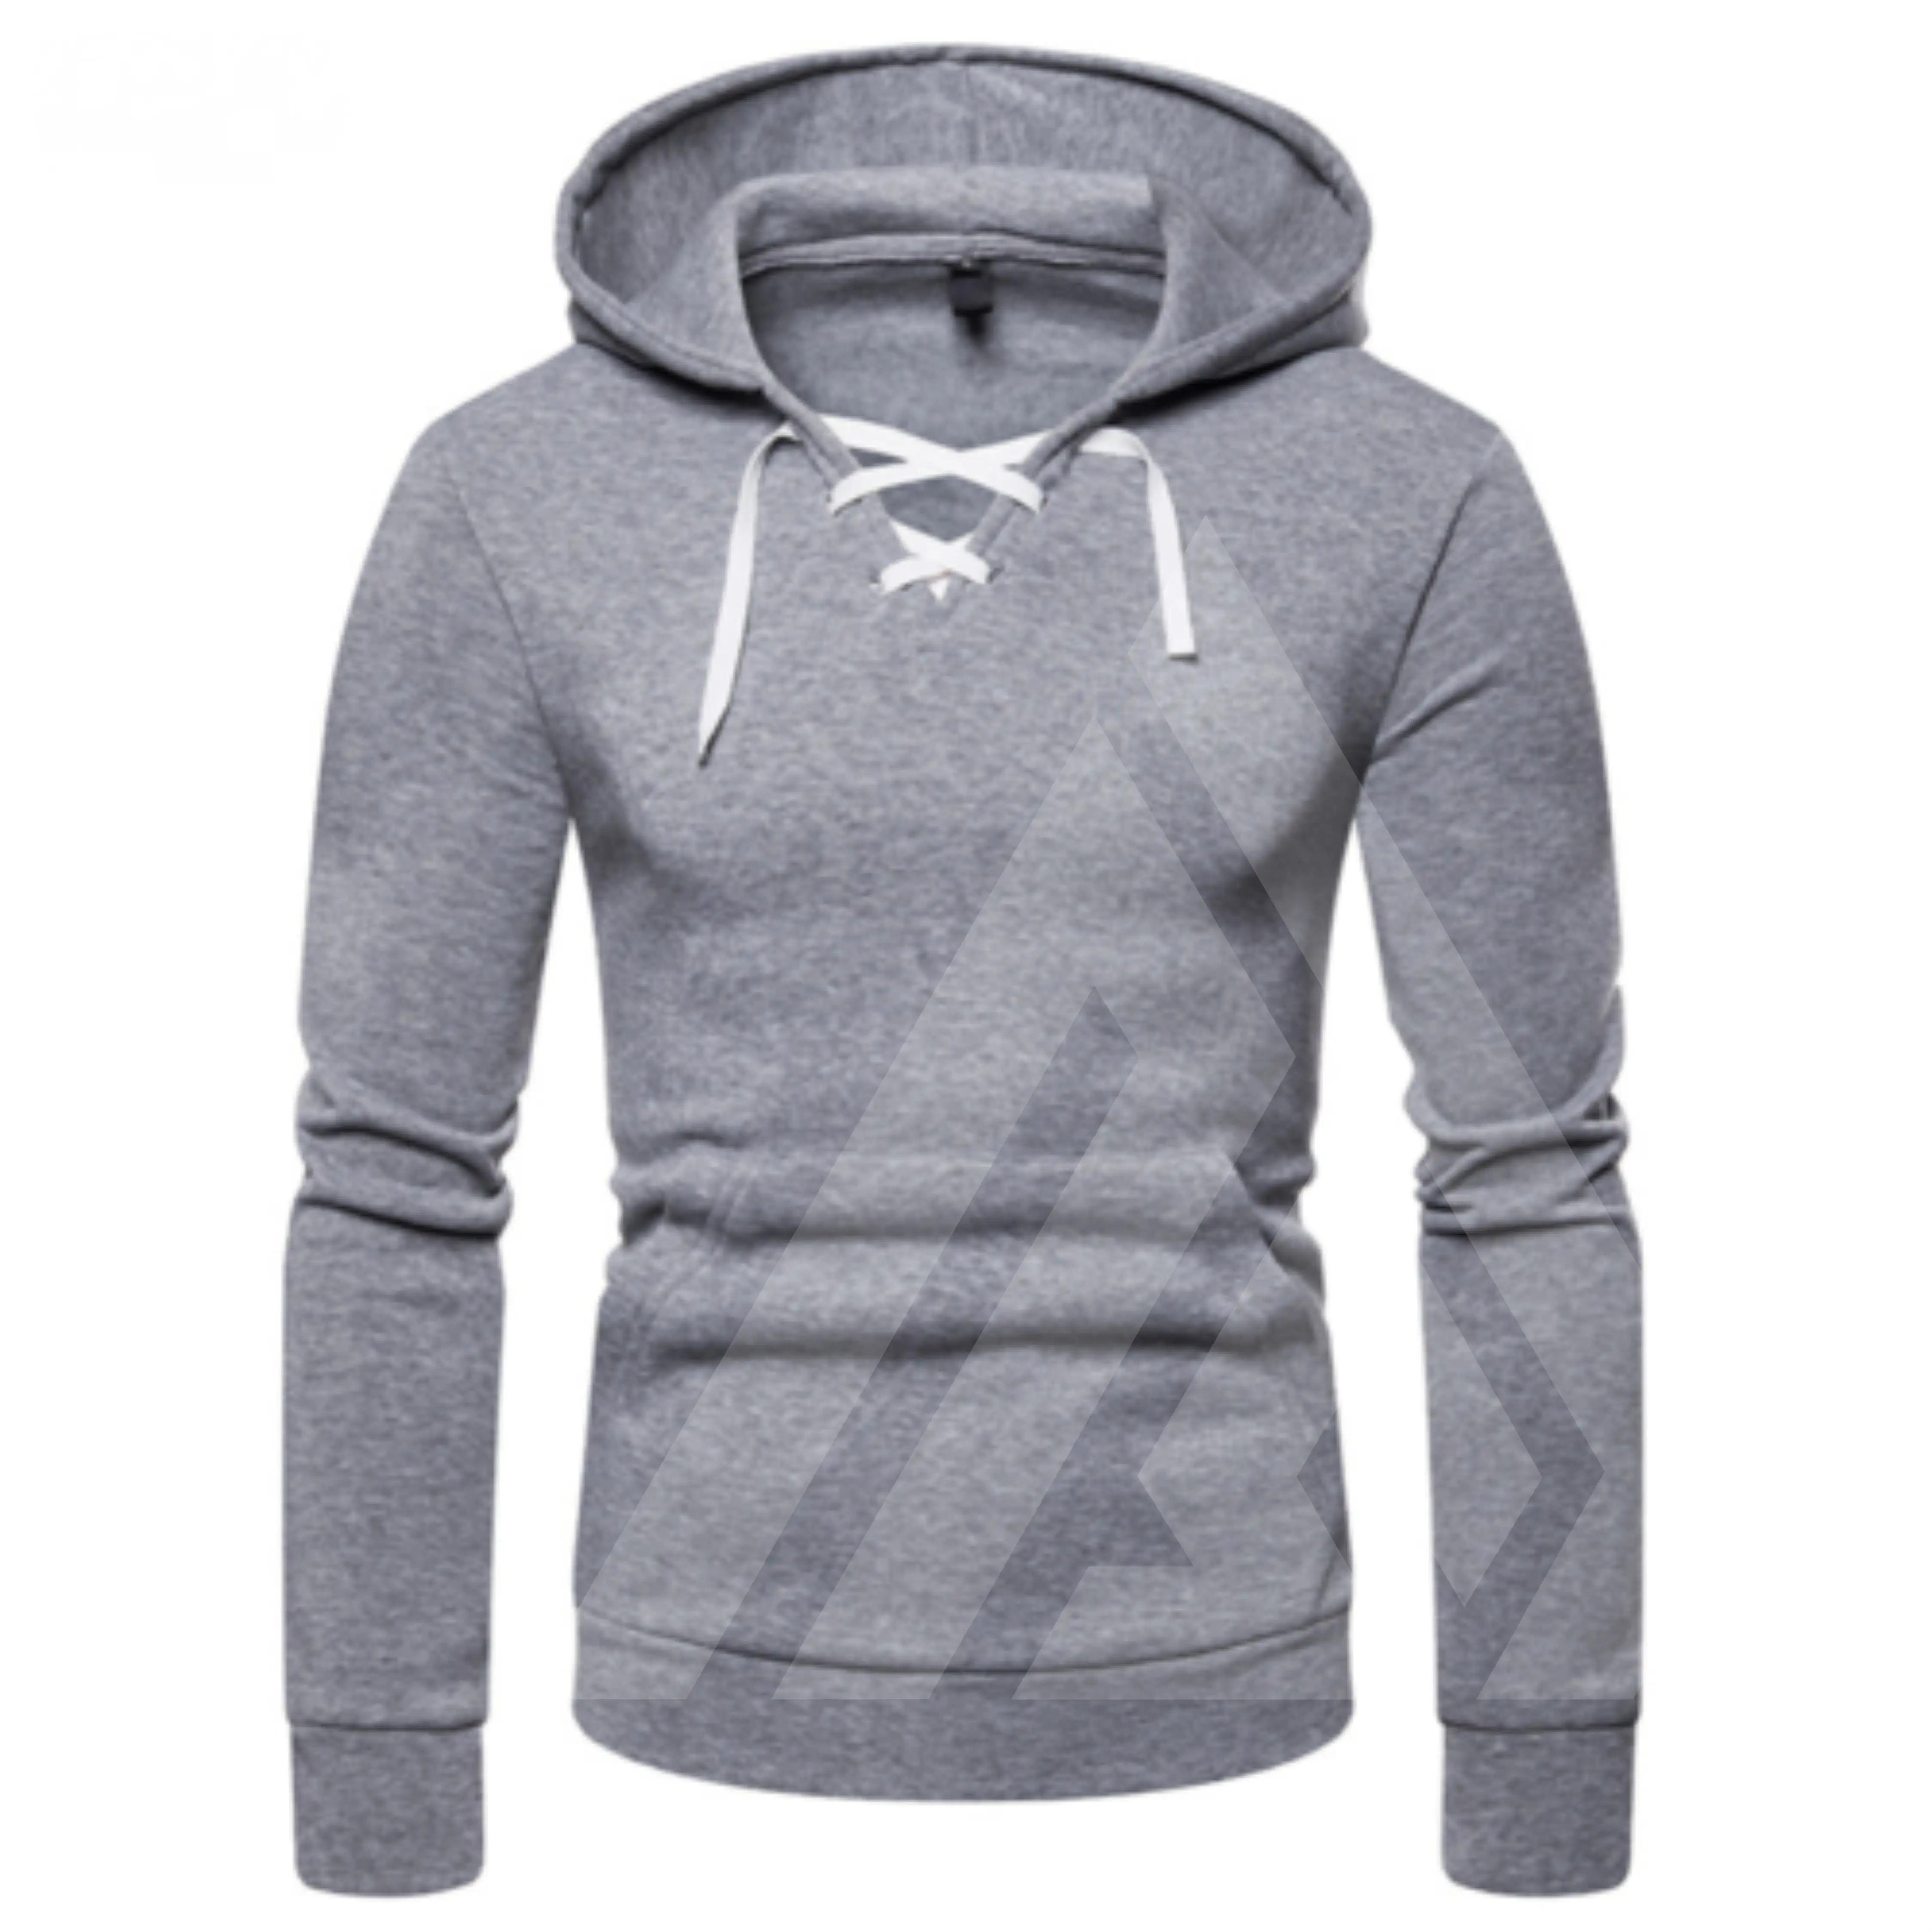 Hoodie katun 100% kustom harga rendah hoodie kualitas tinggi Pullover grosir pakaian pria kustom ramah lingkungan